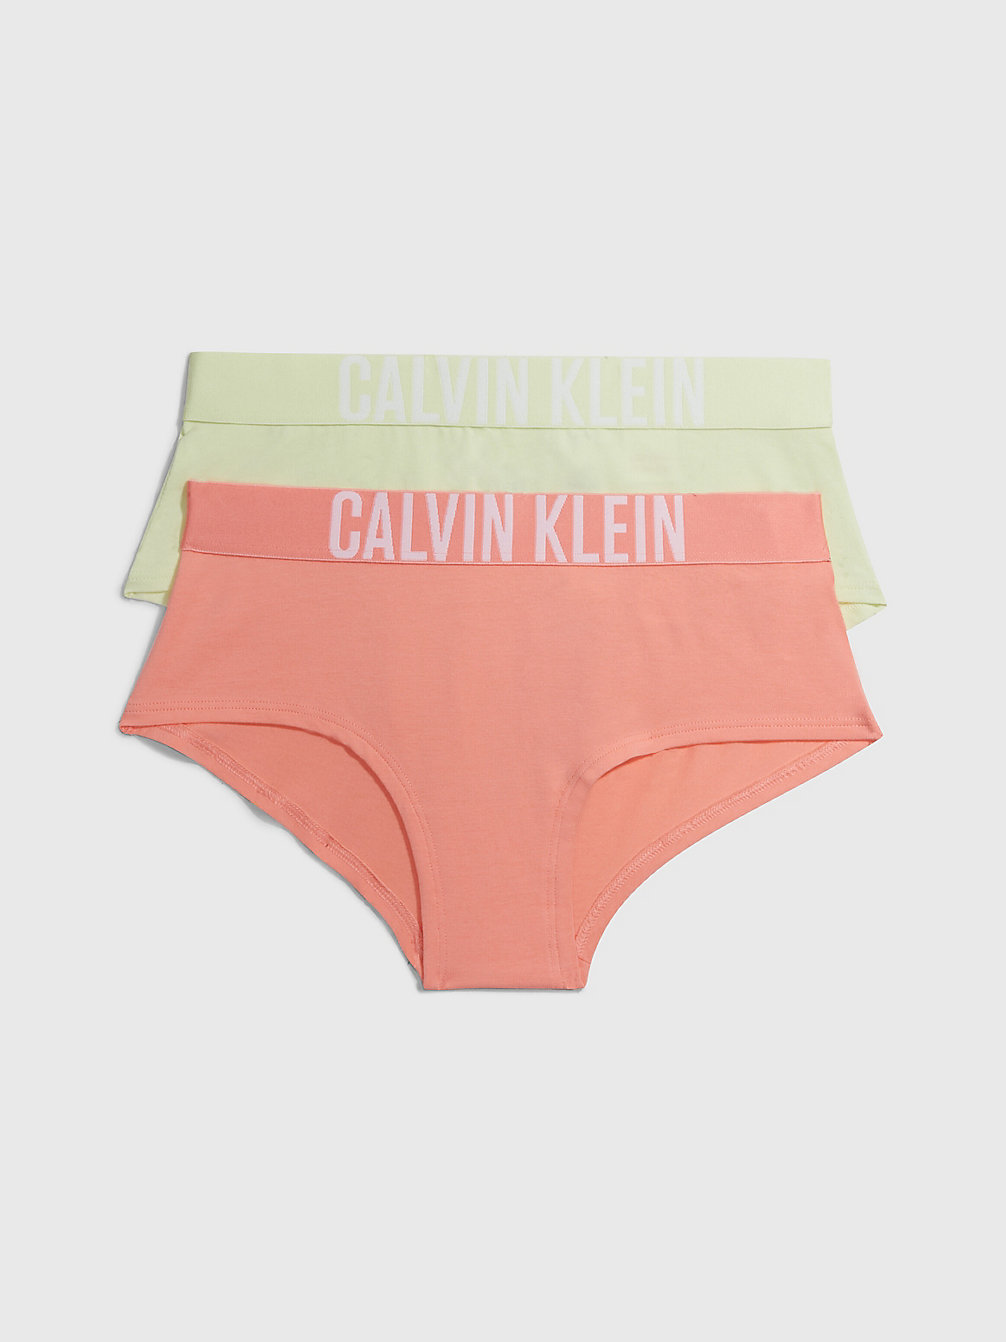 LEMONGRASS/PEACHCORAL 2 Pack Girls Hipster Panties - Intense Power undefined girls Calvin Klein